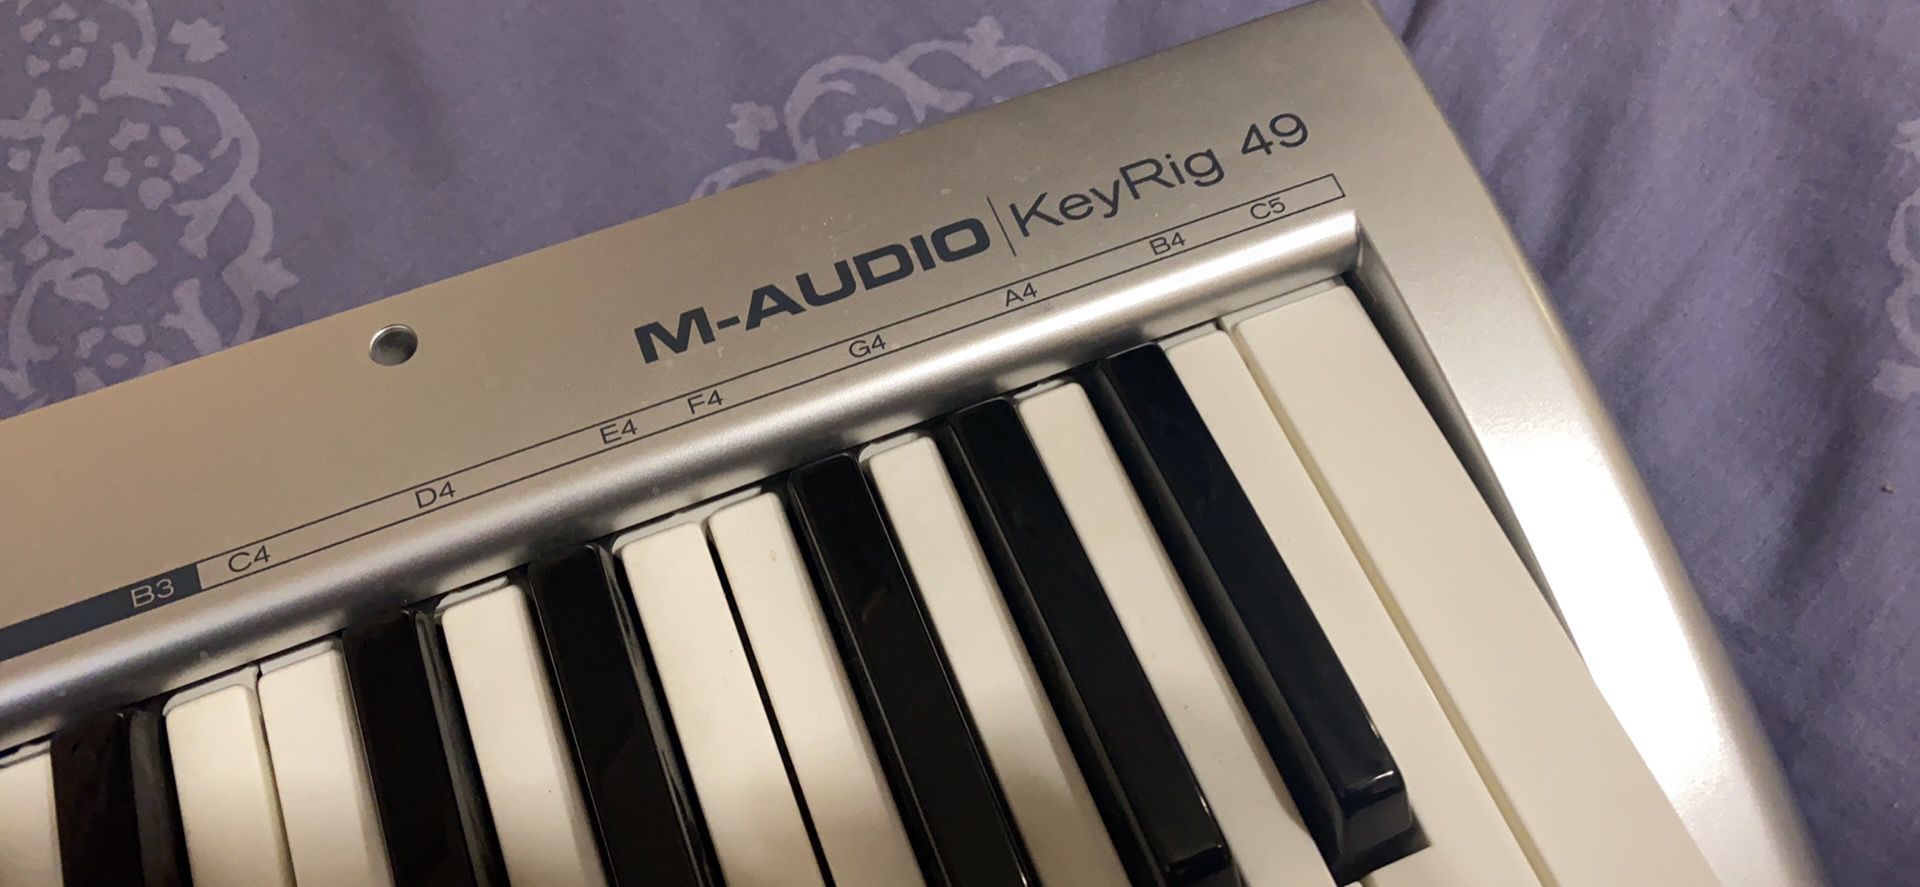 M-Audio keyrig 49